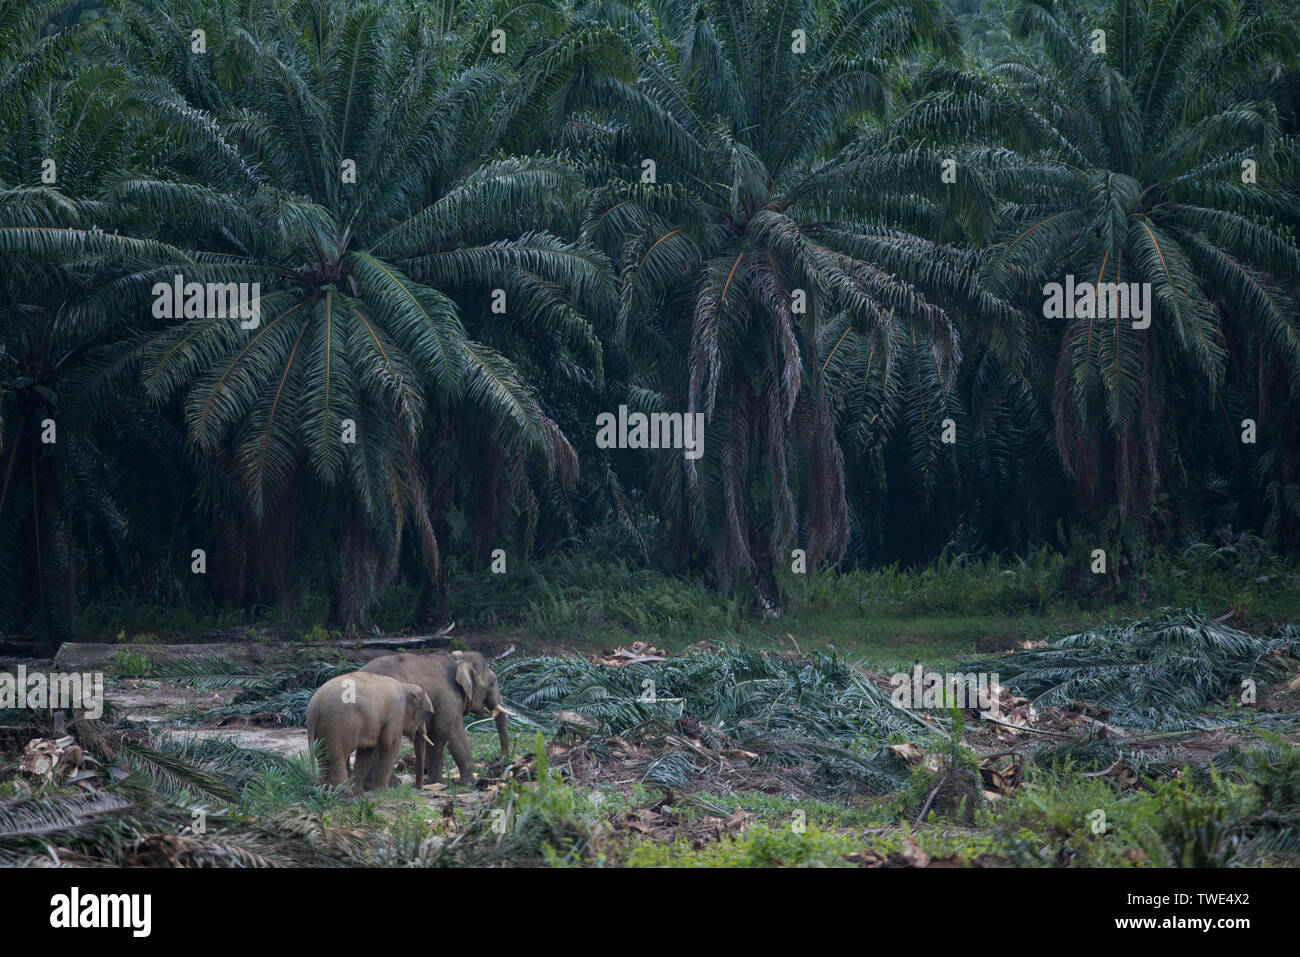 Bornesischen Elefant, Elephas maximus Borneensis, in Öl Palm Plantation, nahe Tawau, Sabah, Borneo, Malaysia. Stockfoto